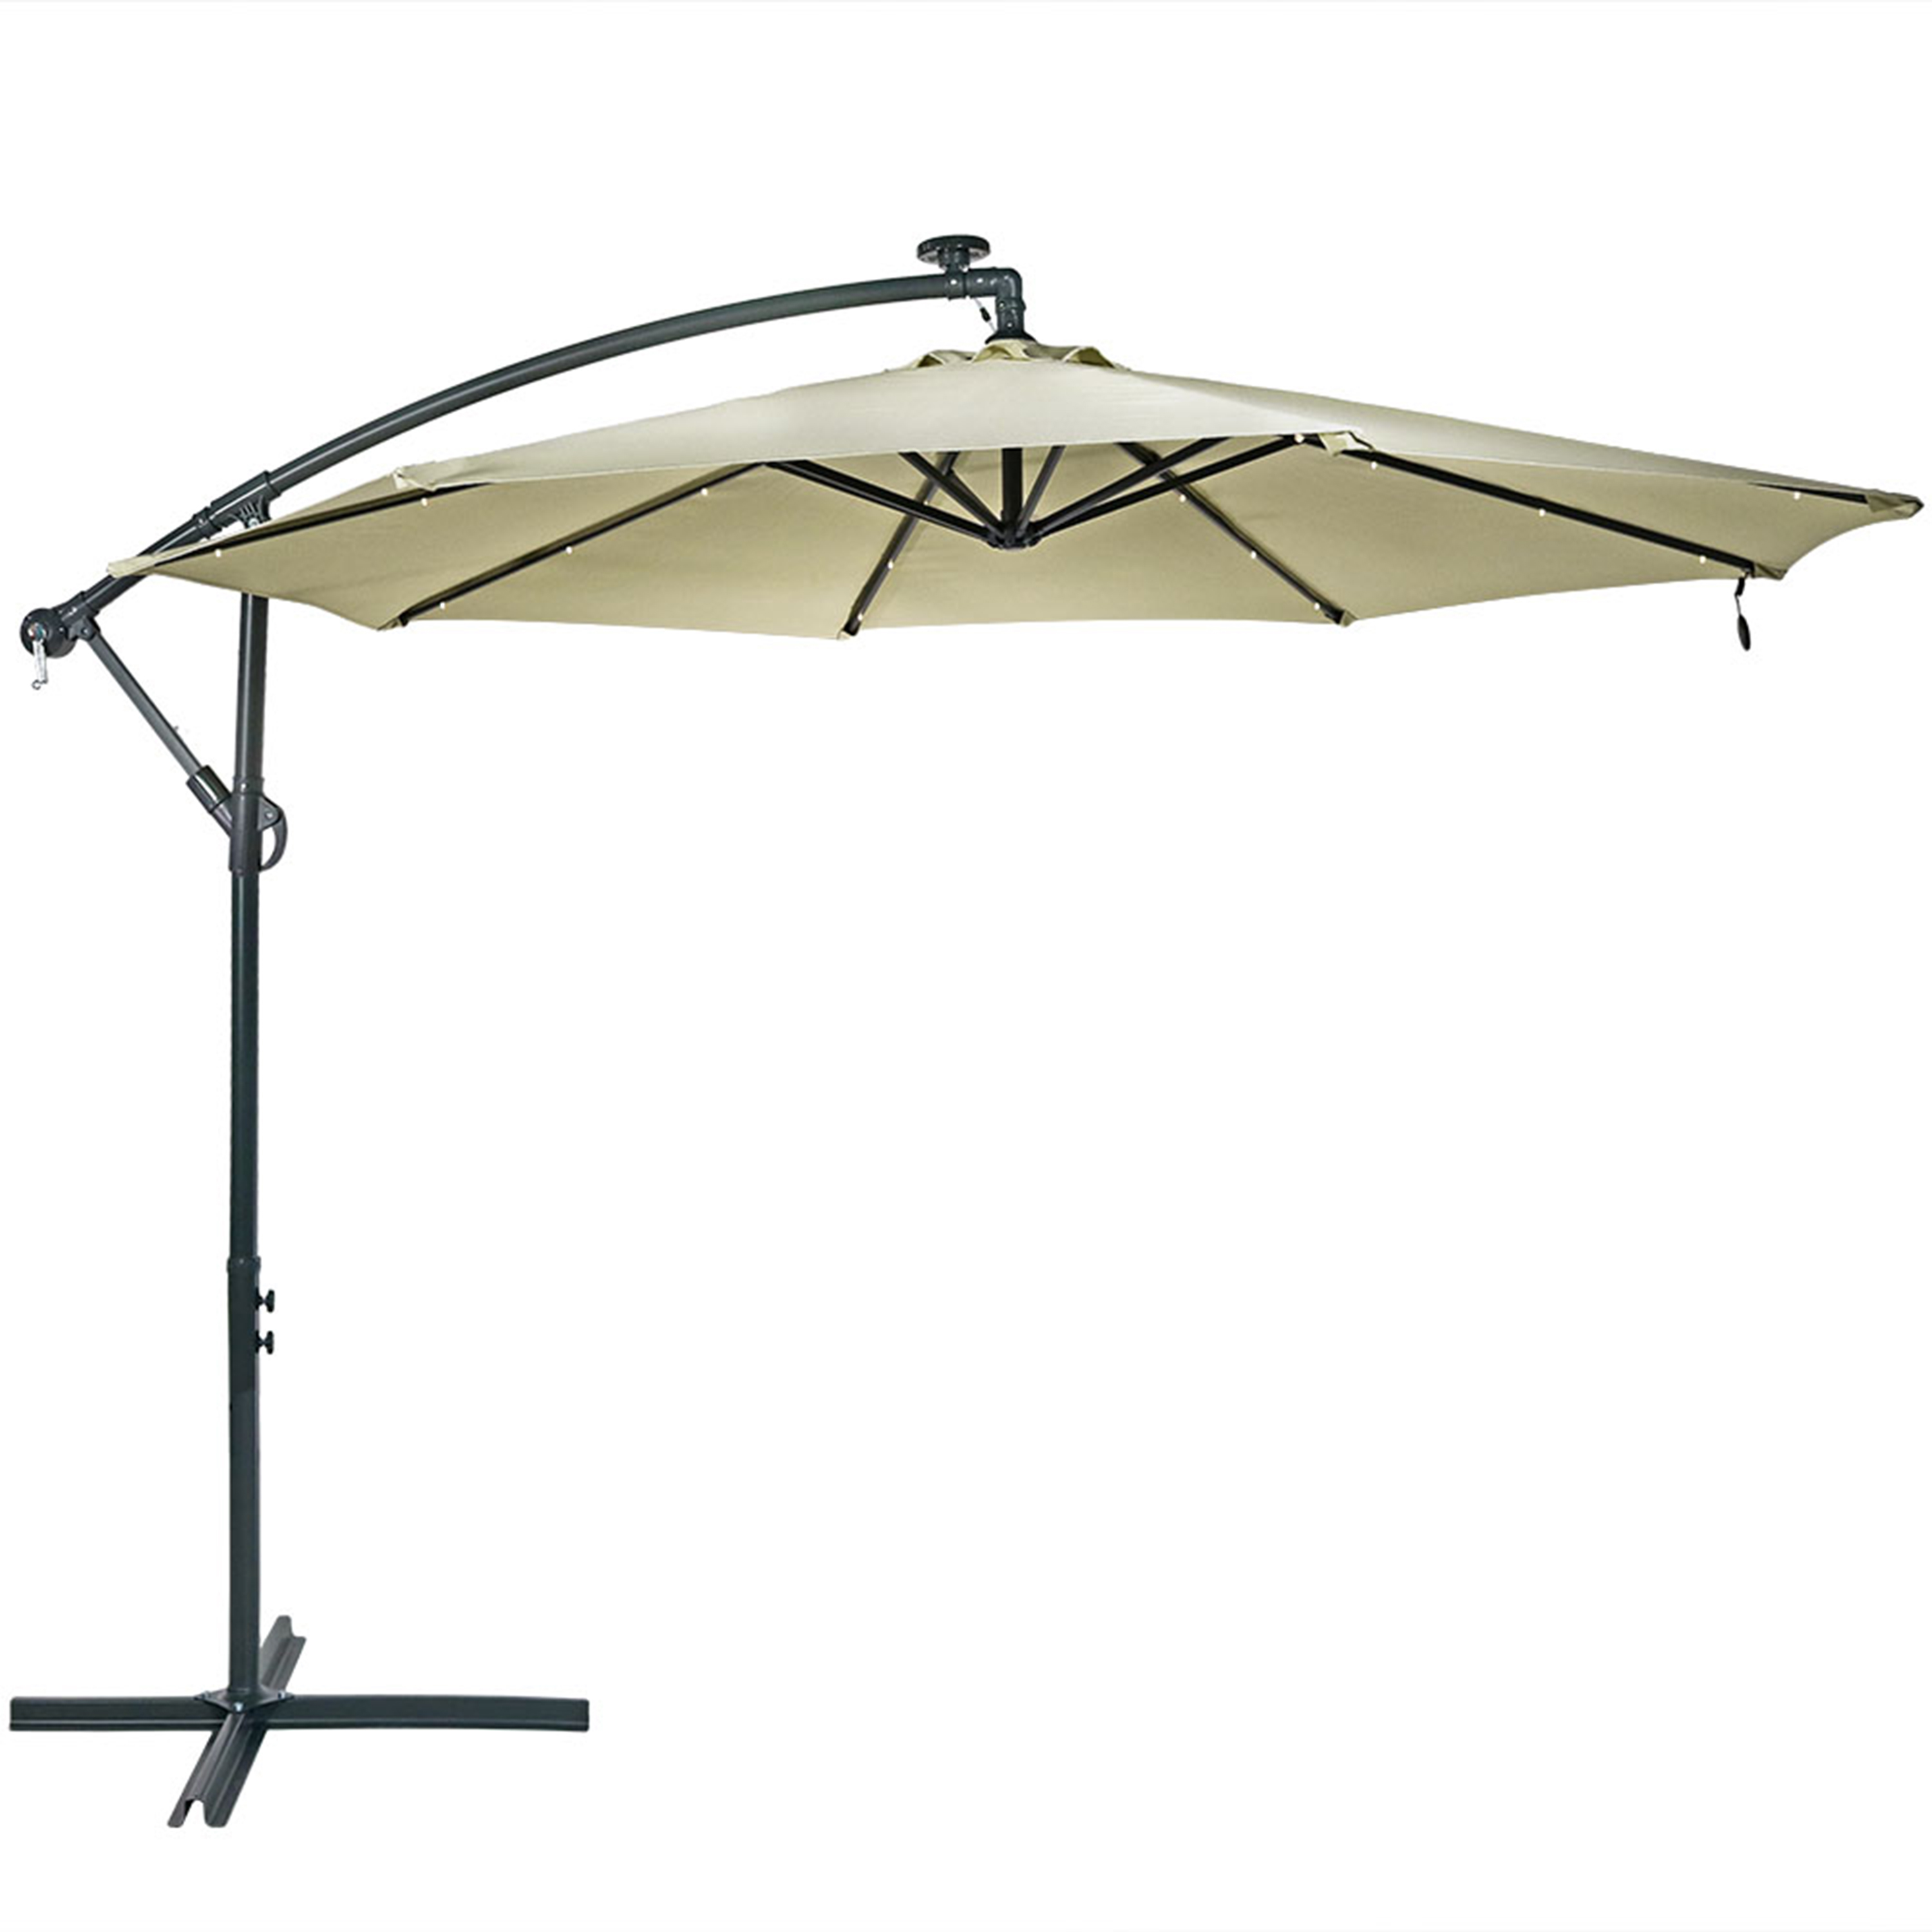 Sunnydaze Solar LED 10-Foot Offset Patio Umbrella with Cantilever, Crank, and Cross Base, Beige